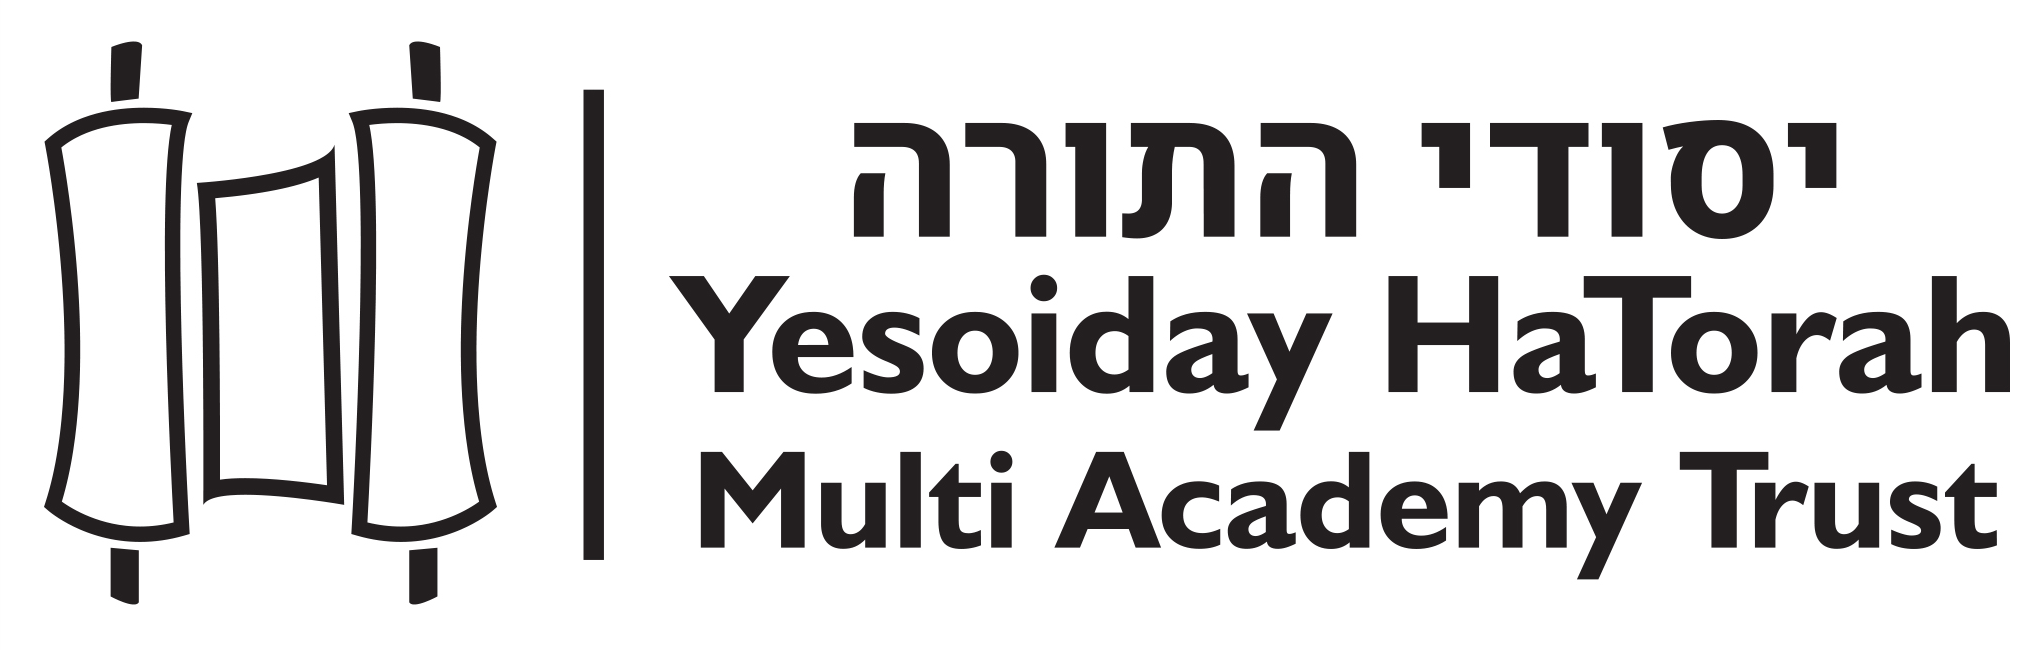 Yesoiday Hatorah Multi Academy Trust